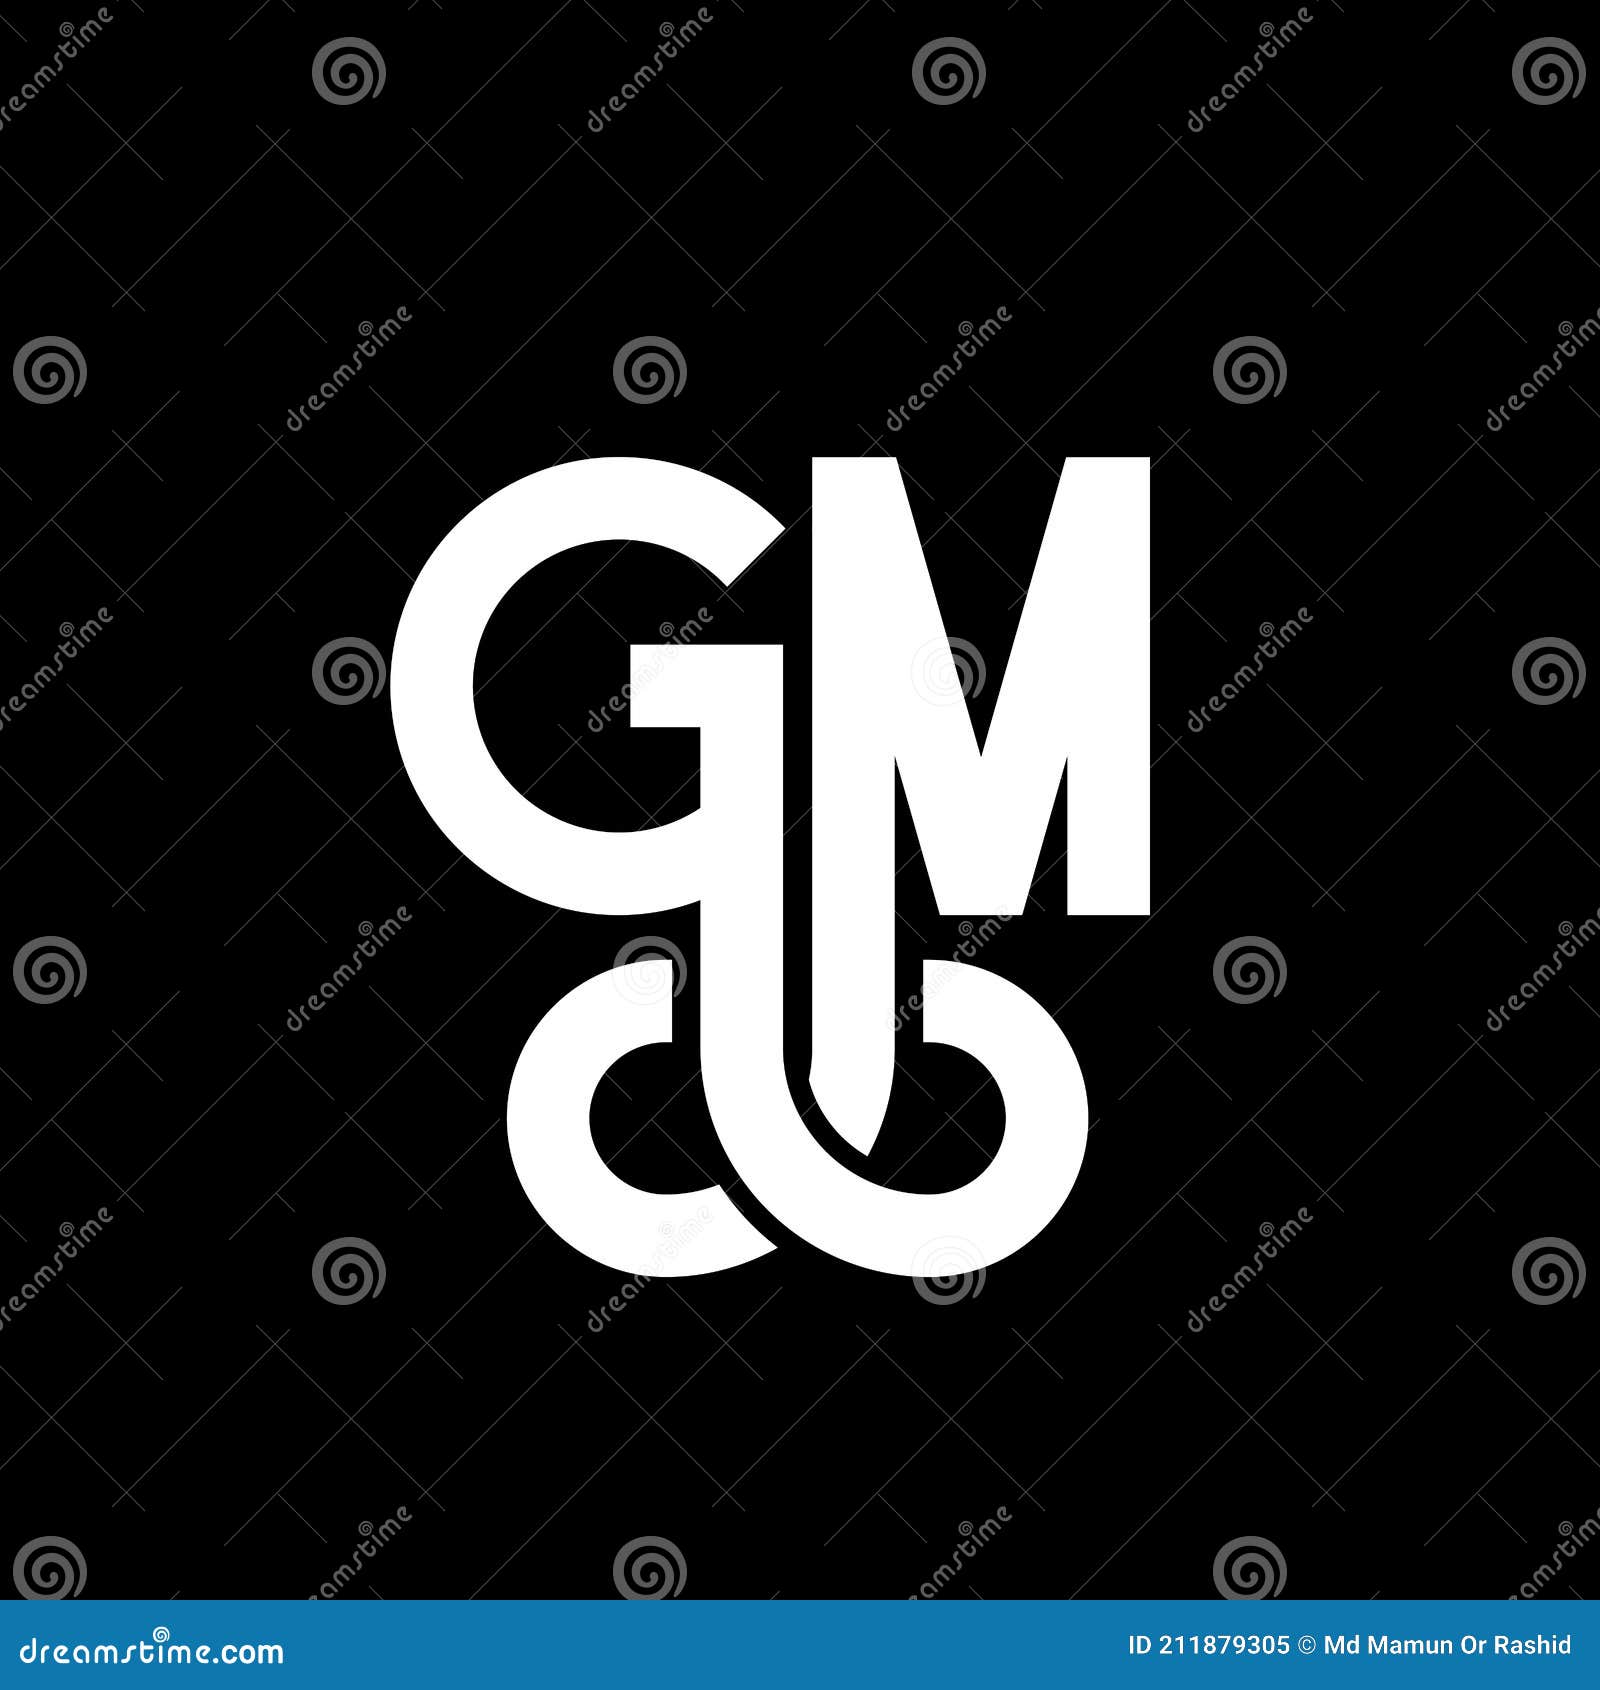 GM Letter Logo Design on Black Background. GM Creative Initials Letter Logo  Concept. Gm Letter Design Stock Vector - Illustration of gmlogos, company:  211879305